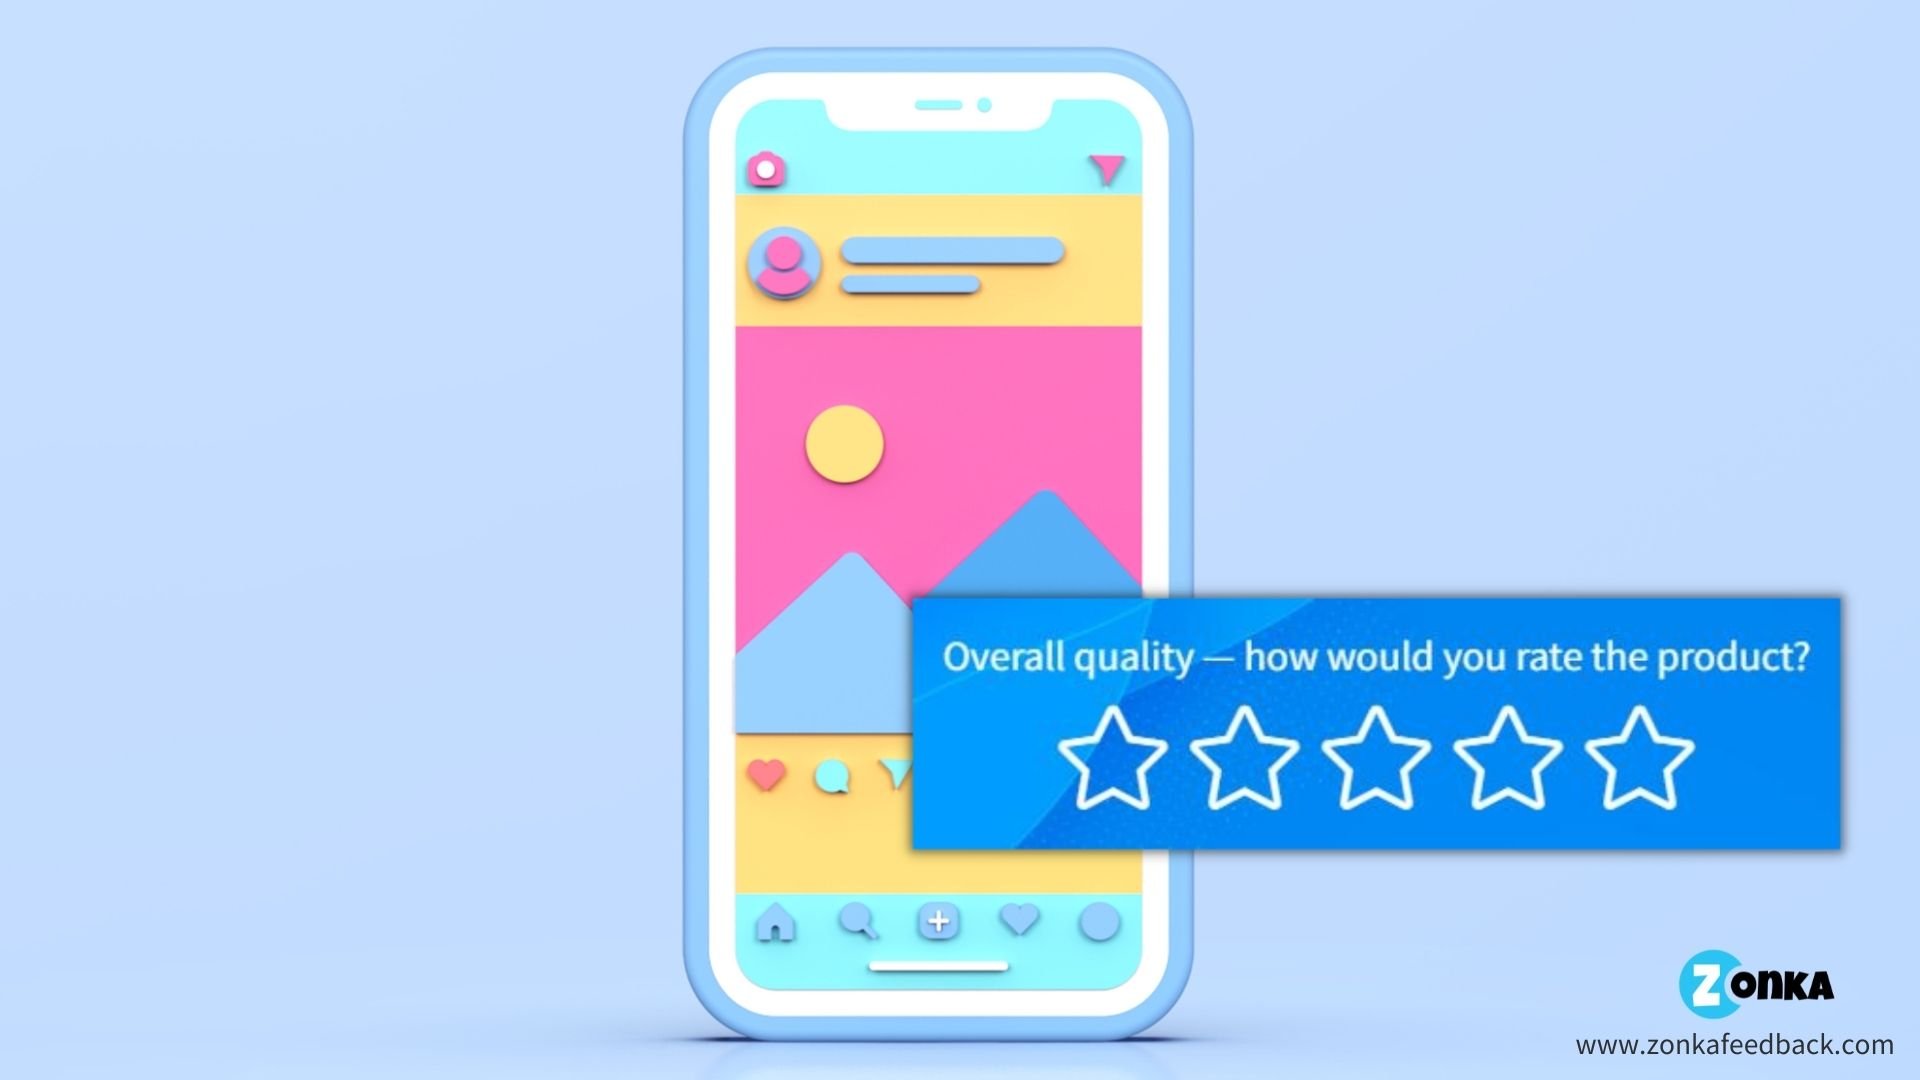 in-app survey with in-app feedback tool